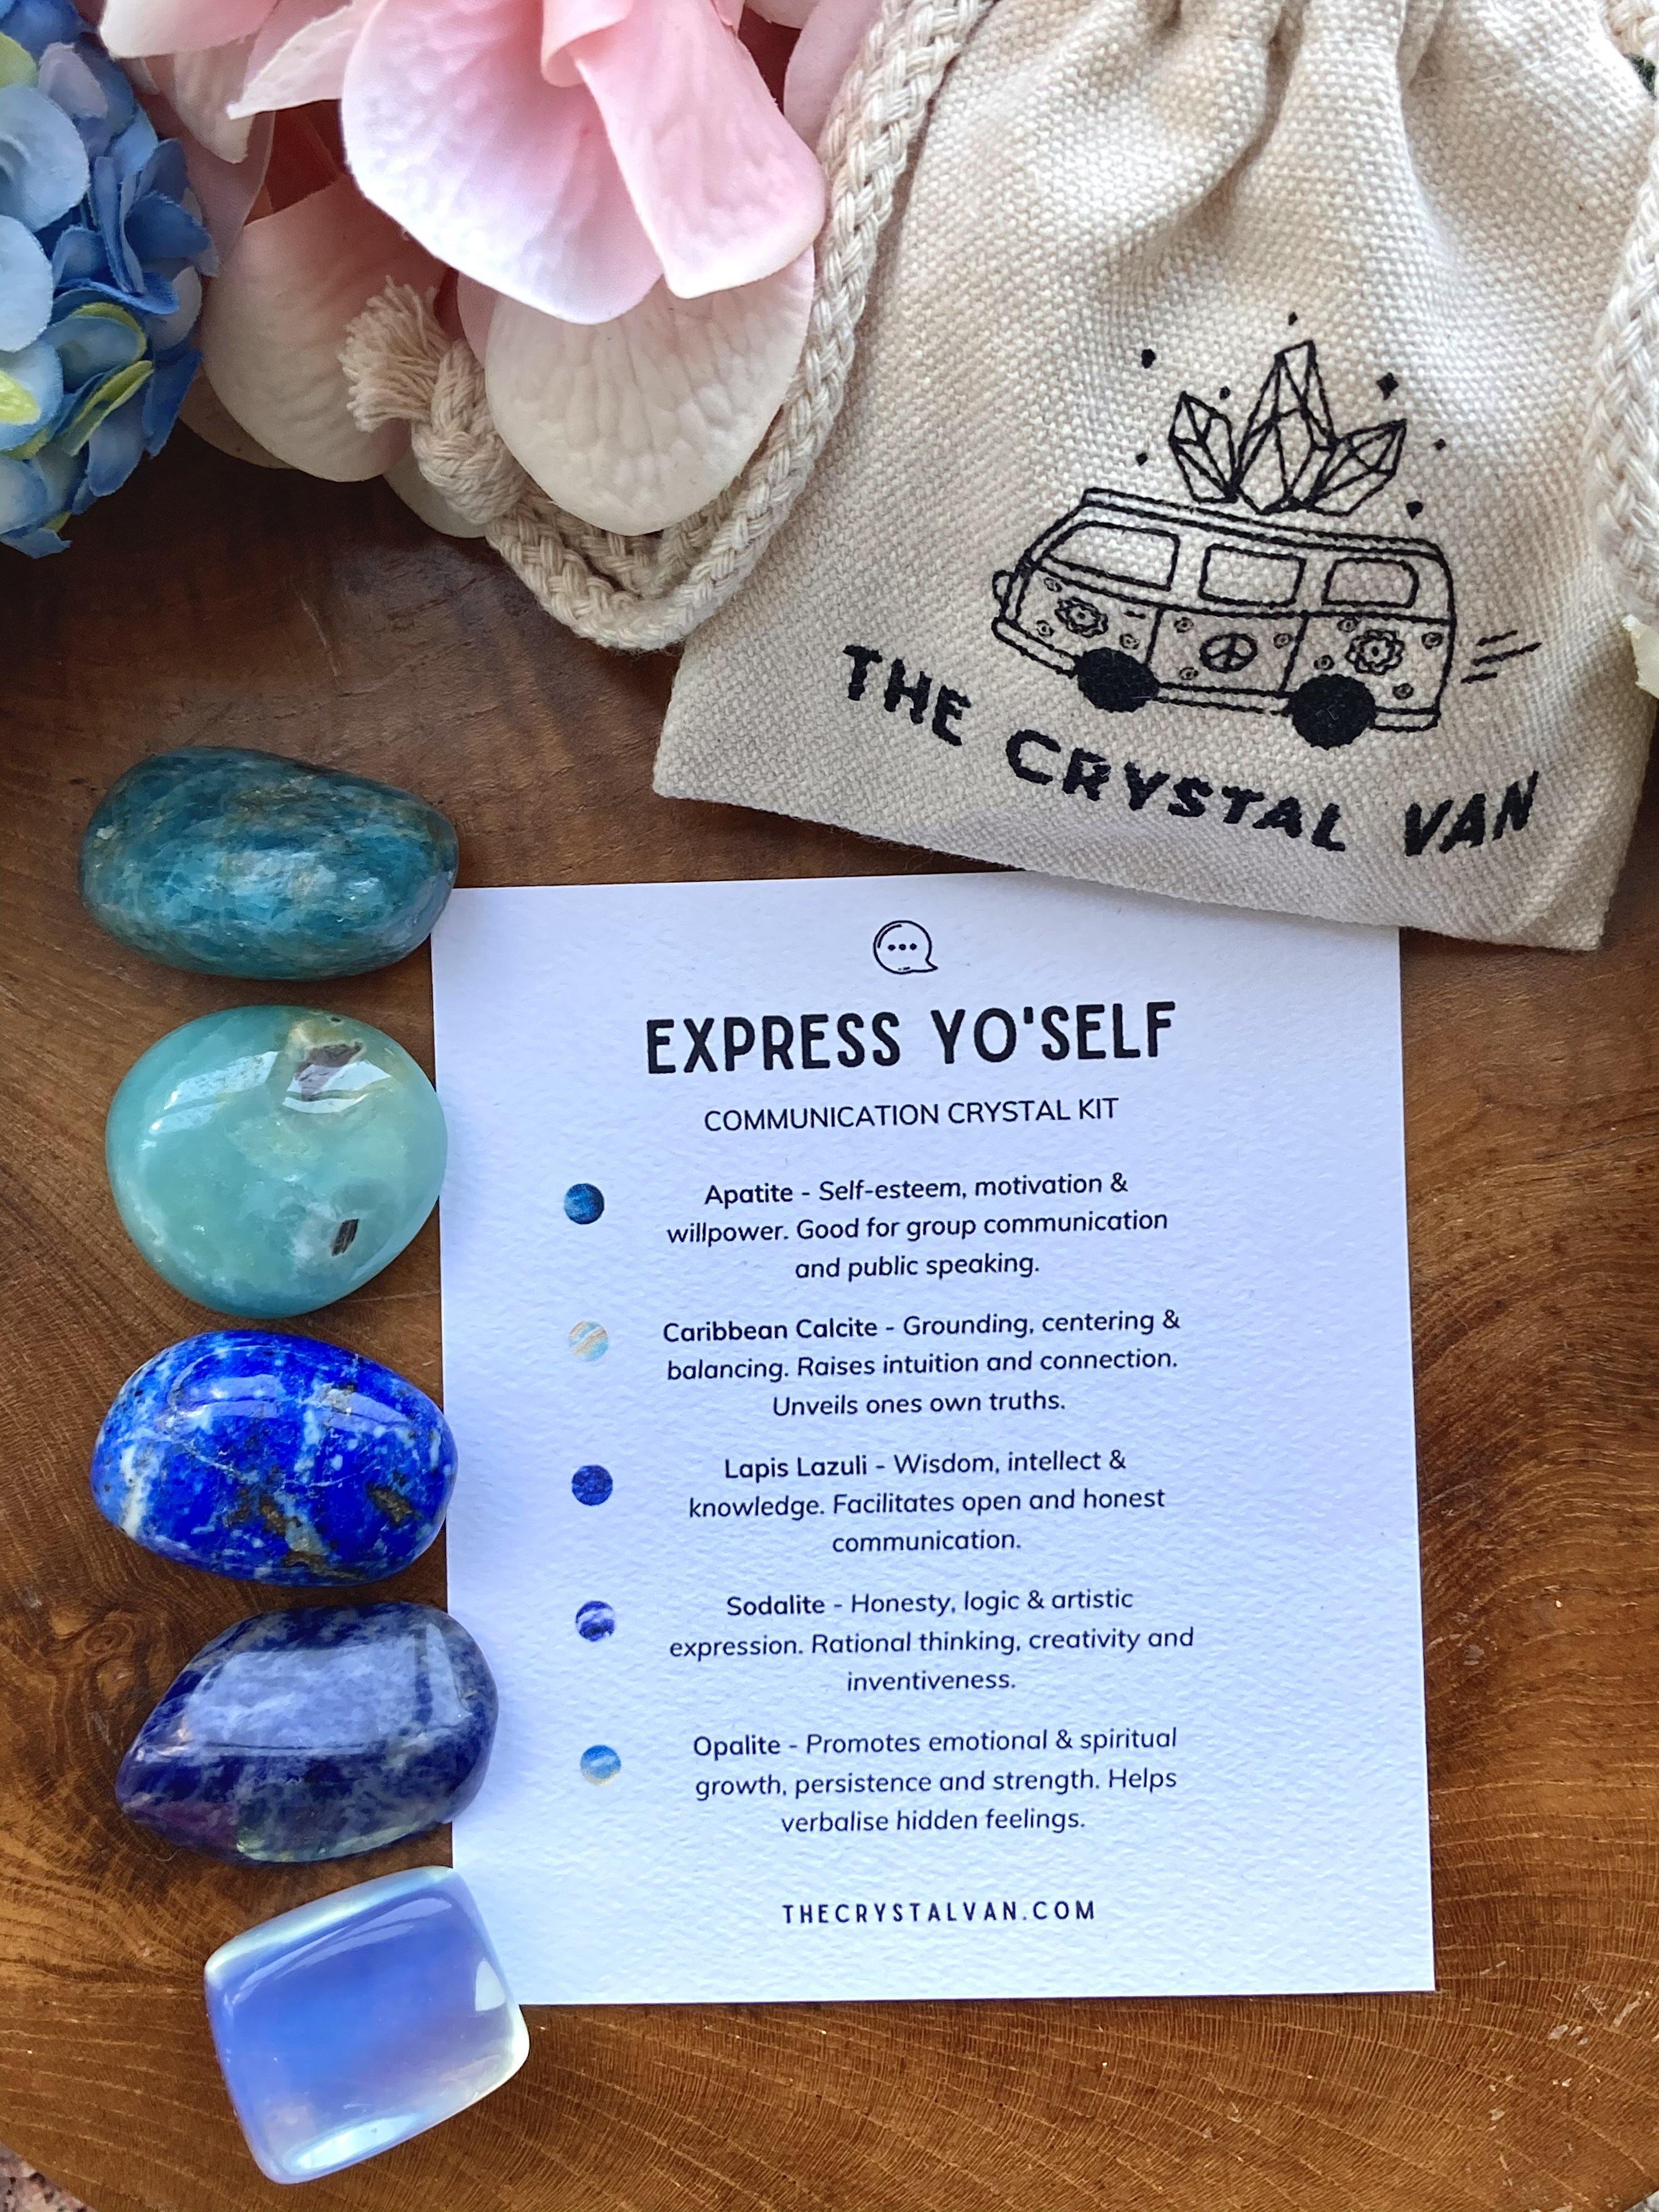 Express Yo'self - Communication Crystal Kit - thecrystalvan